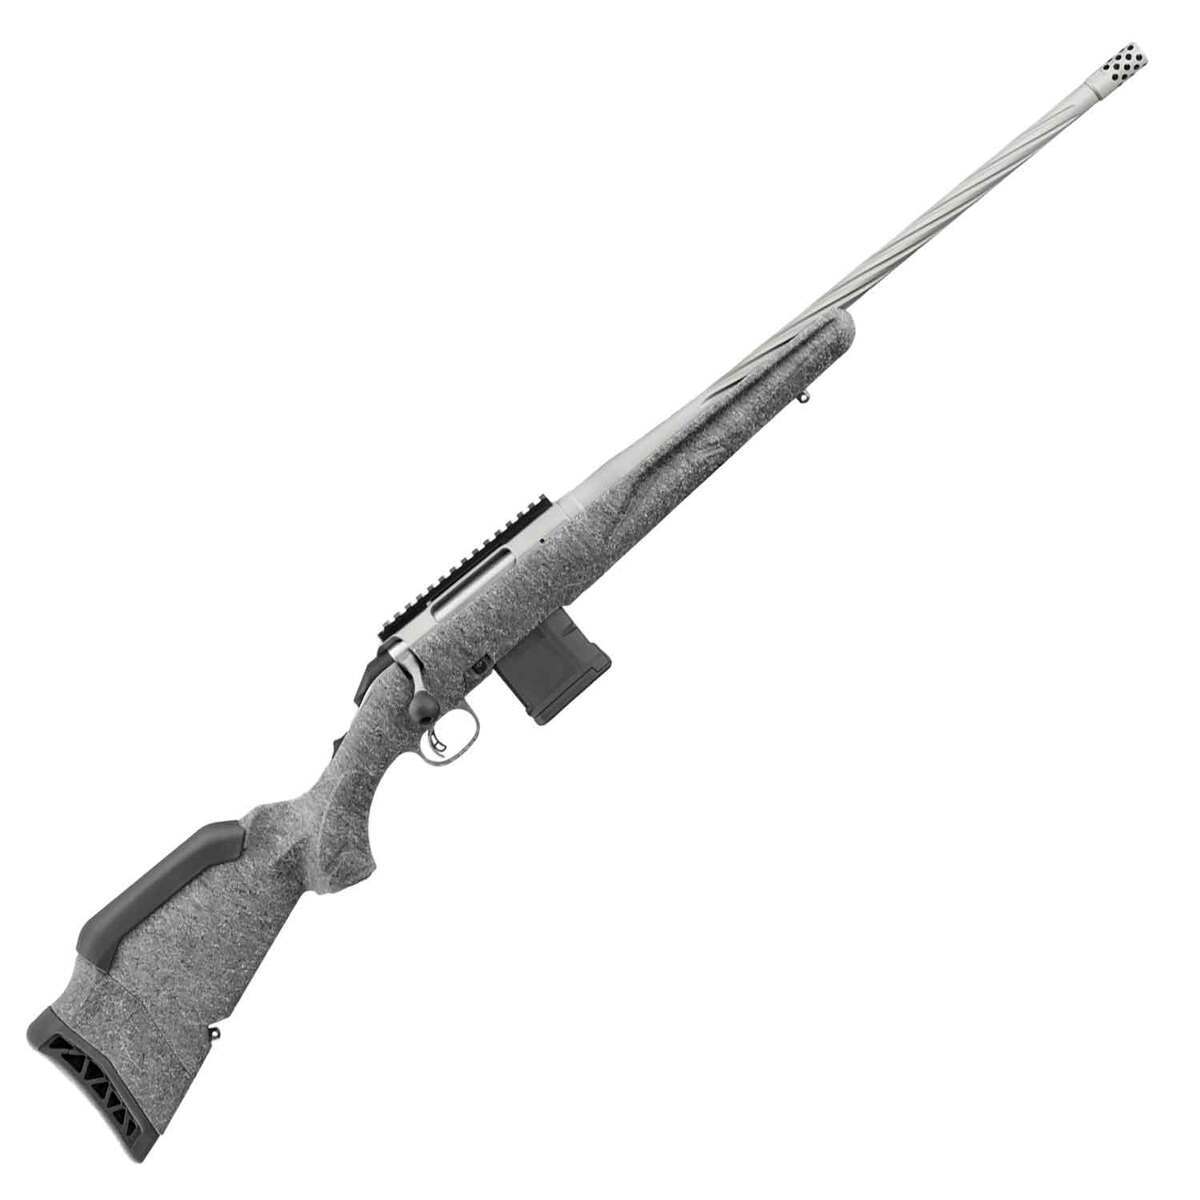 Ruger American Rifle Generation II 223 Remington Gun Metal Gray